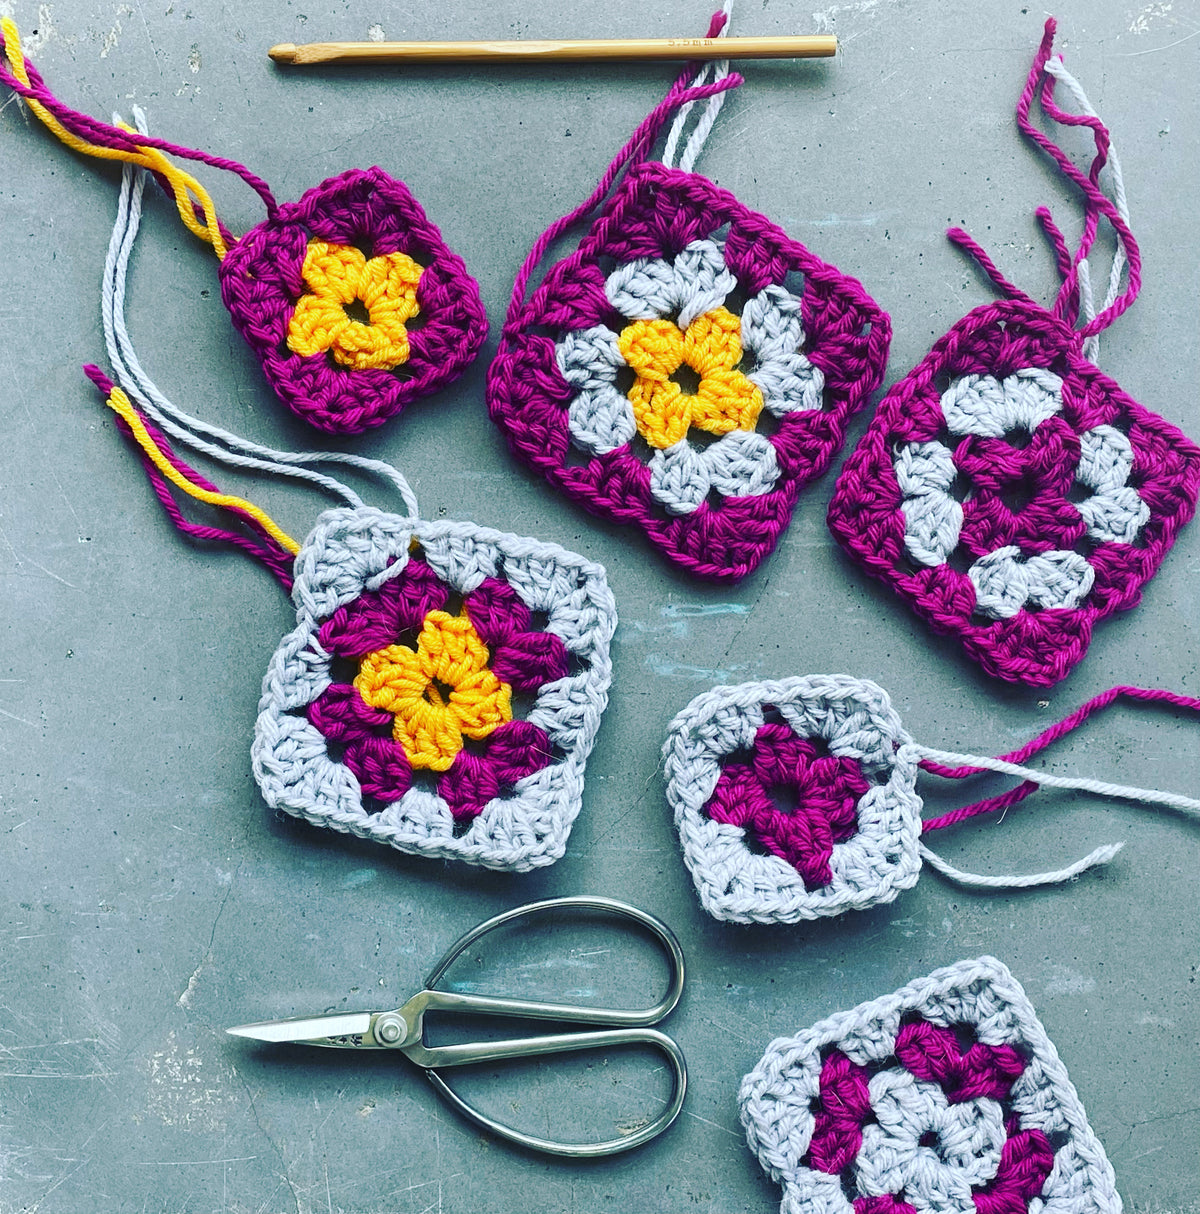 Crochet Workshop :: Squares